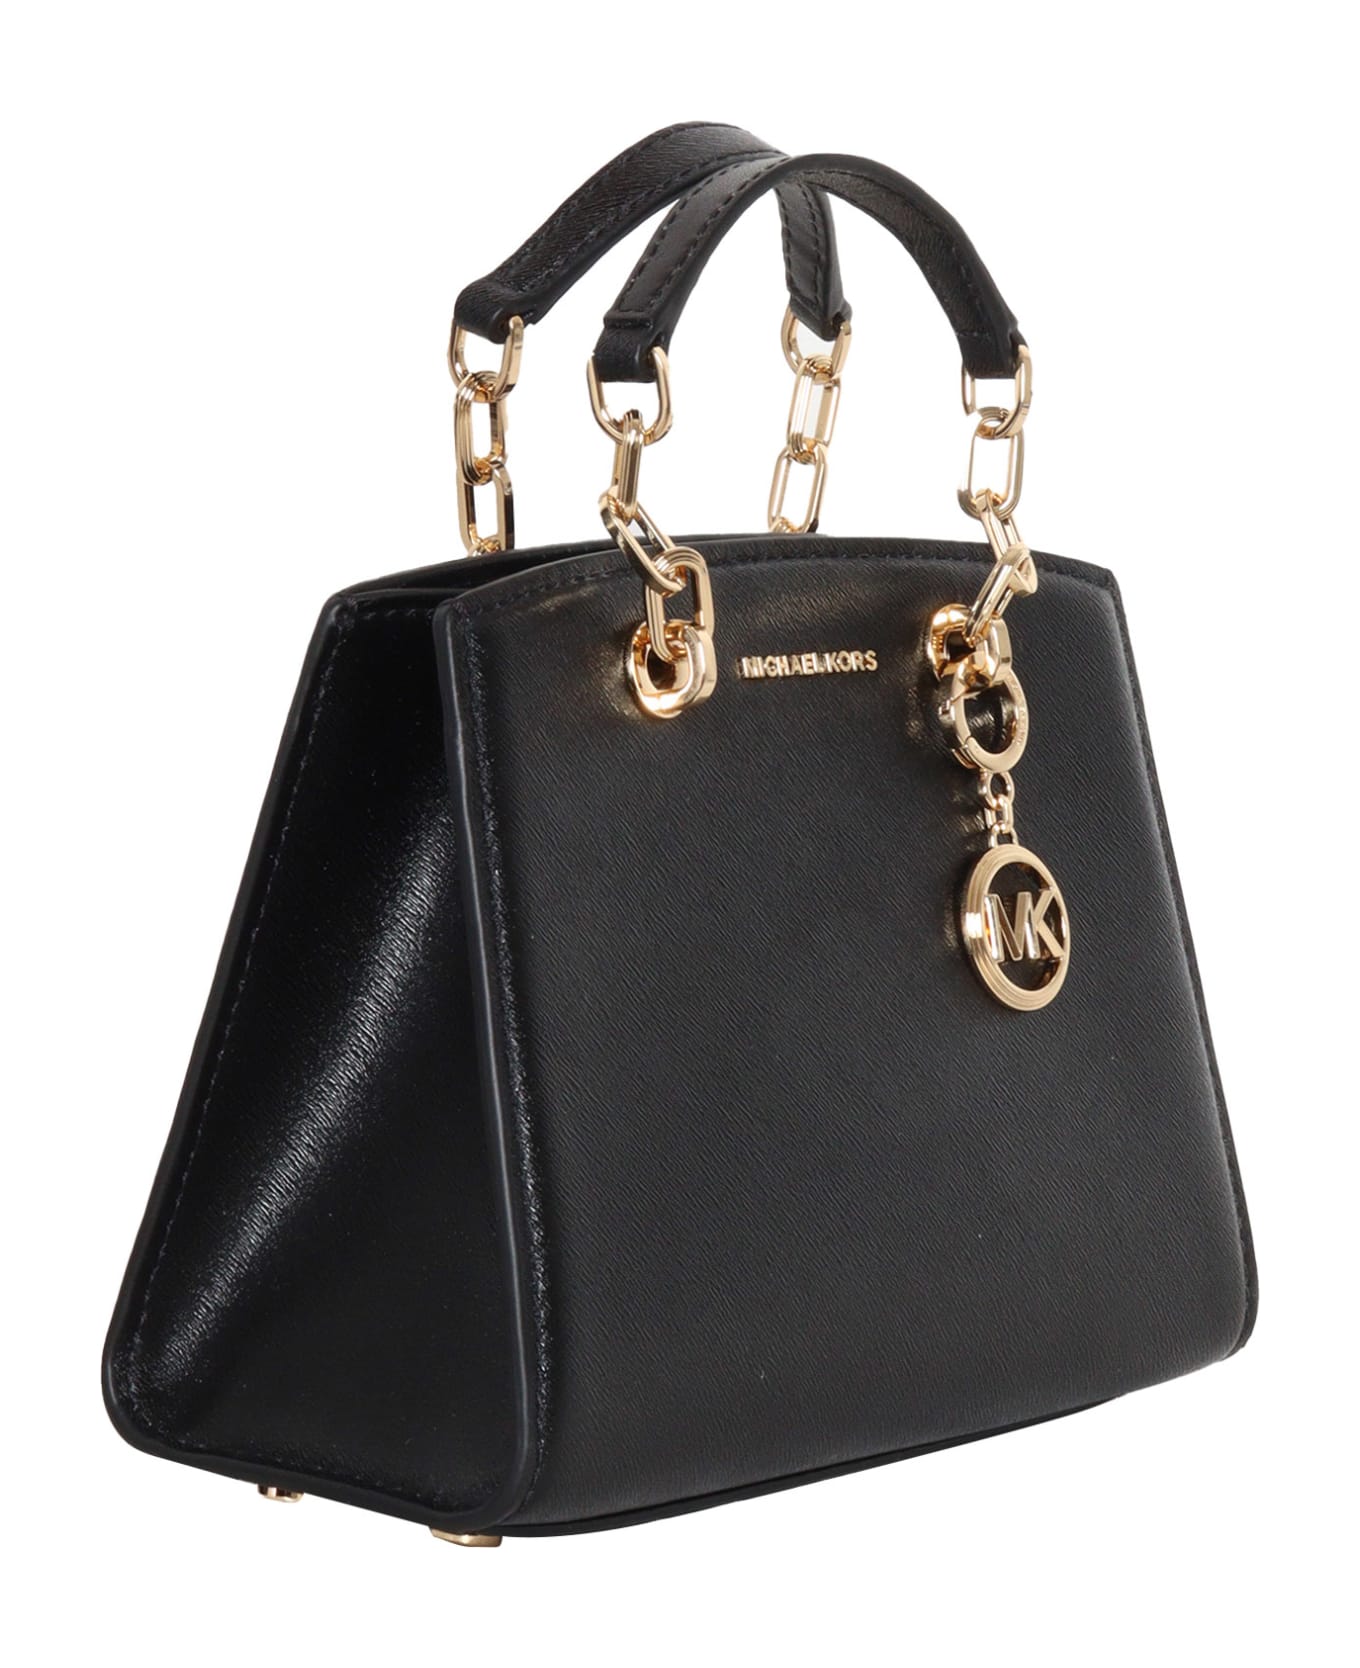 Michael Kors Black Xbody Leather Handbag - BLACK